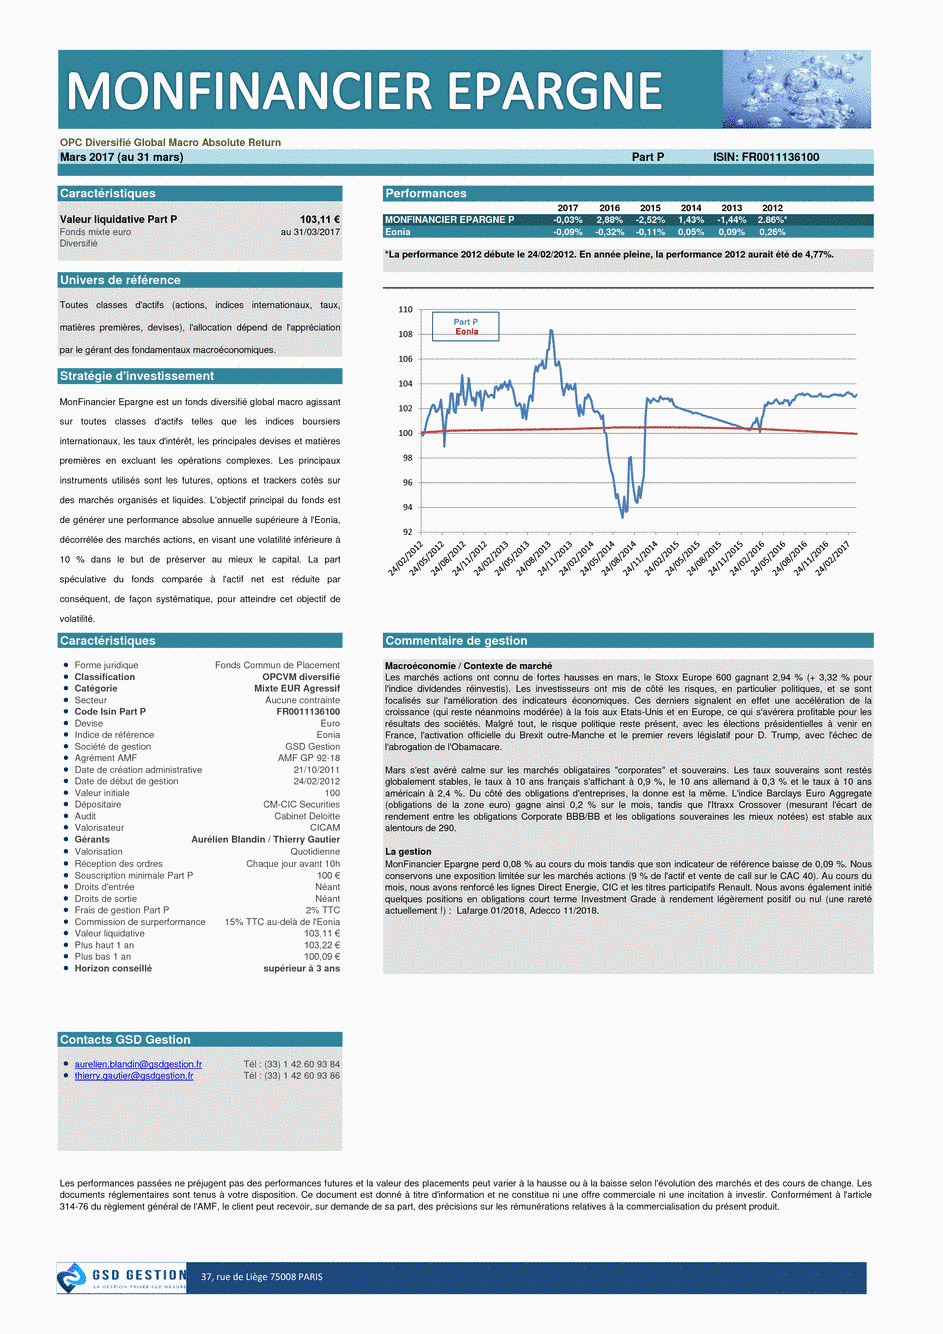 Reporting Monfinancier Epargne P - 05/04/2017 - undefined